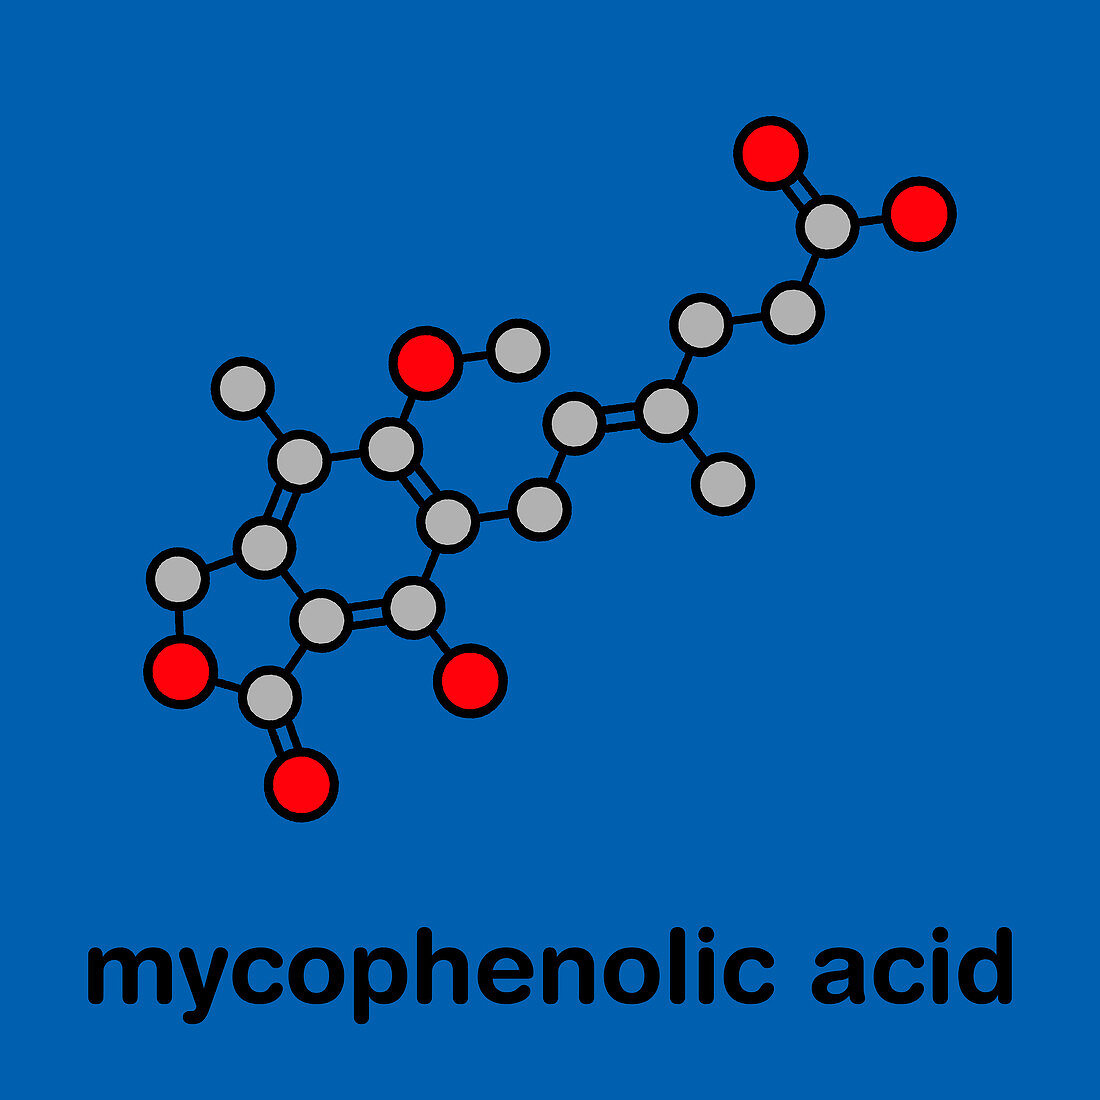 Mycophenolate immunosuppressive drug, molecular model